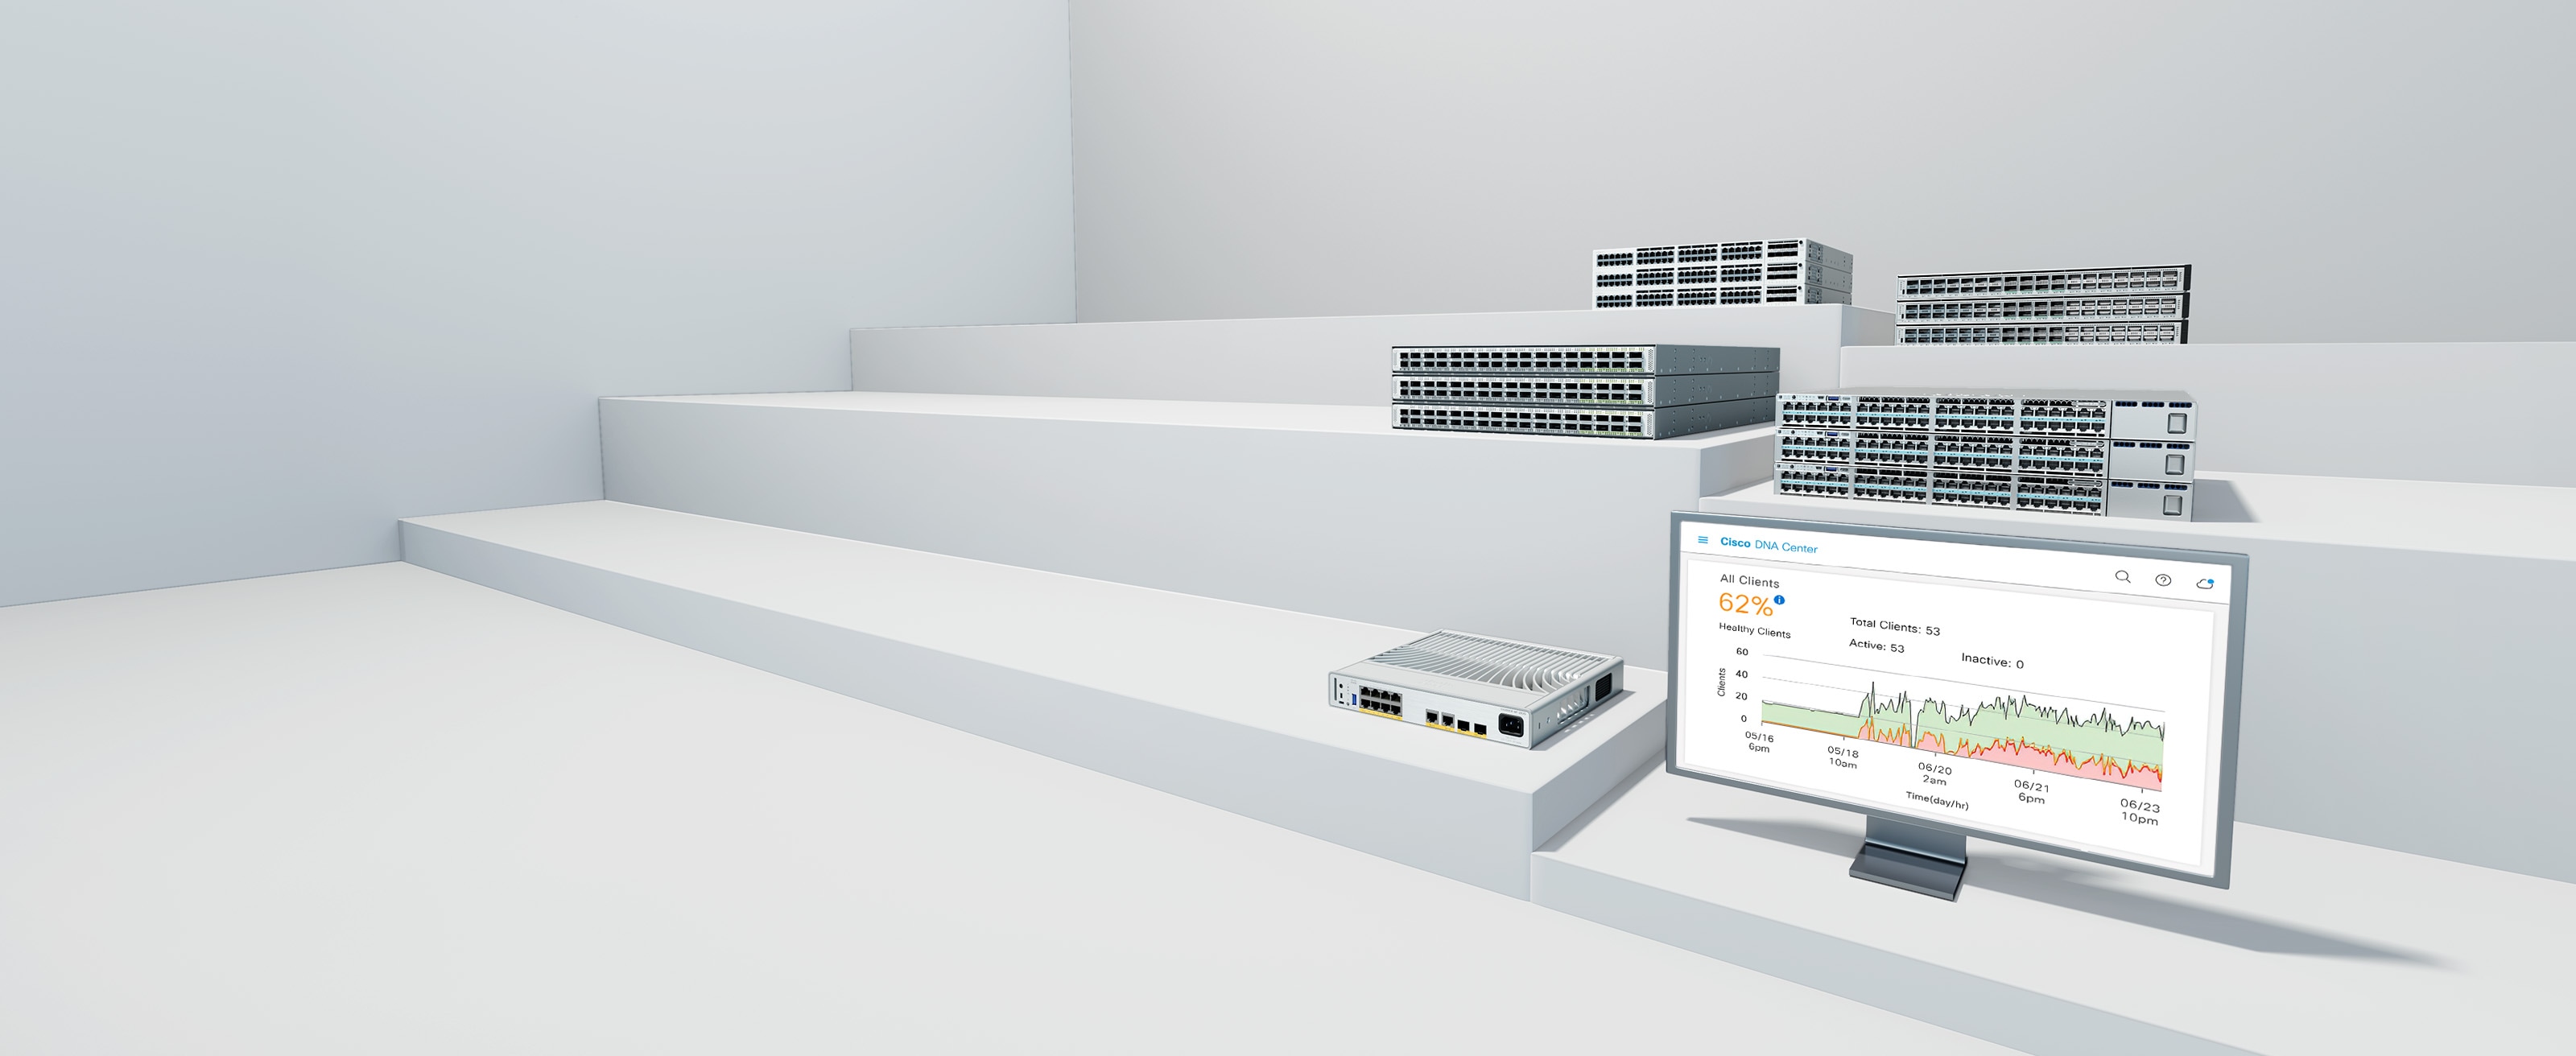 Cisco Catalyst, Cisco Meraki, and Cisco Nexus switches with Cisco DNA Center controller